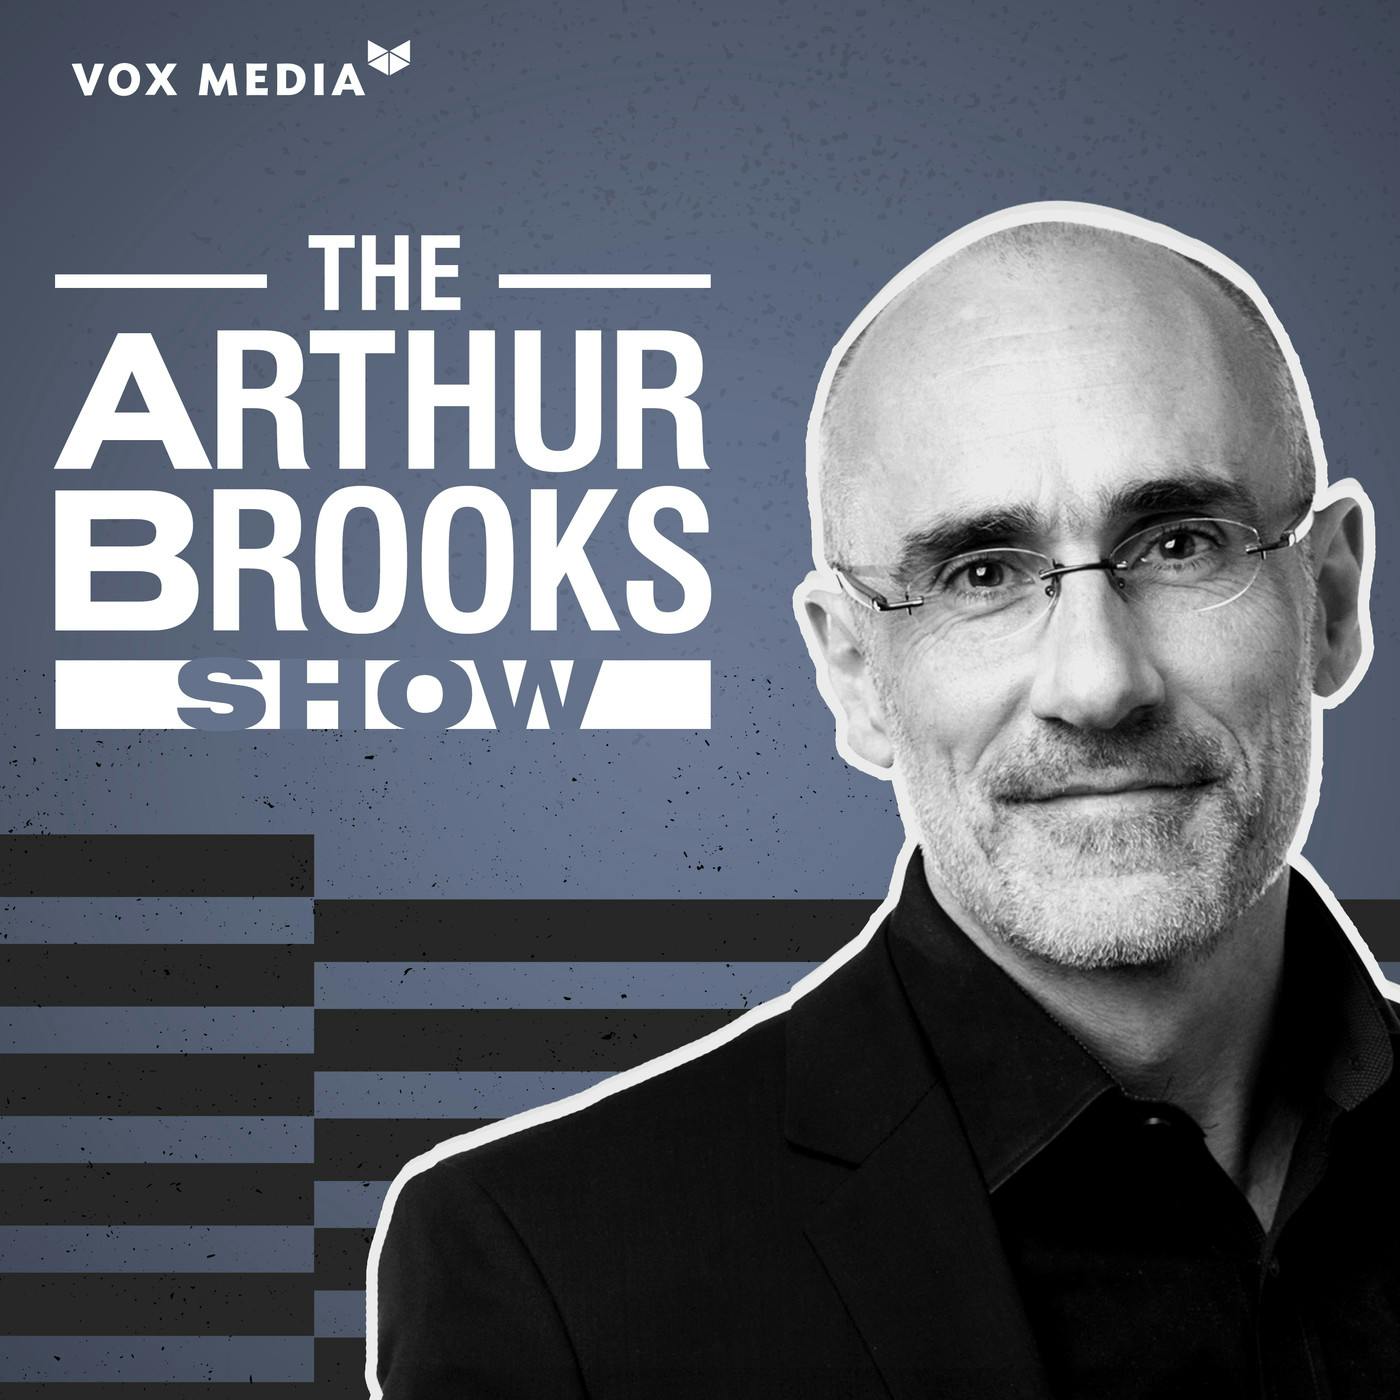 Introducing the Arthur Brooks Show